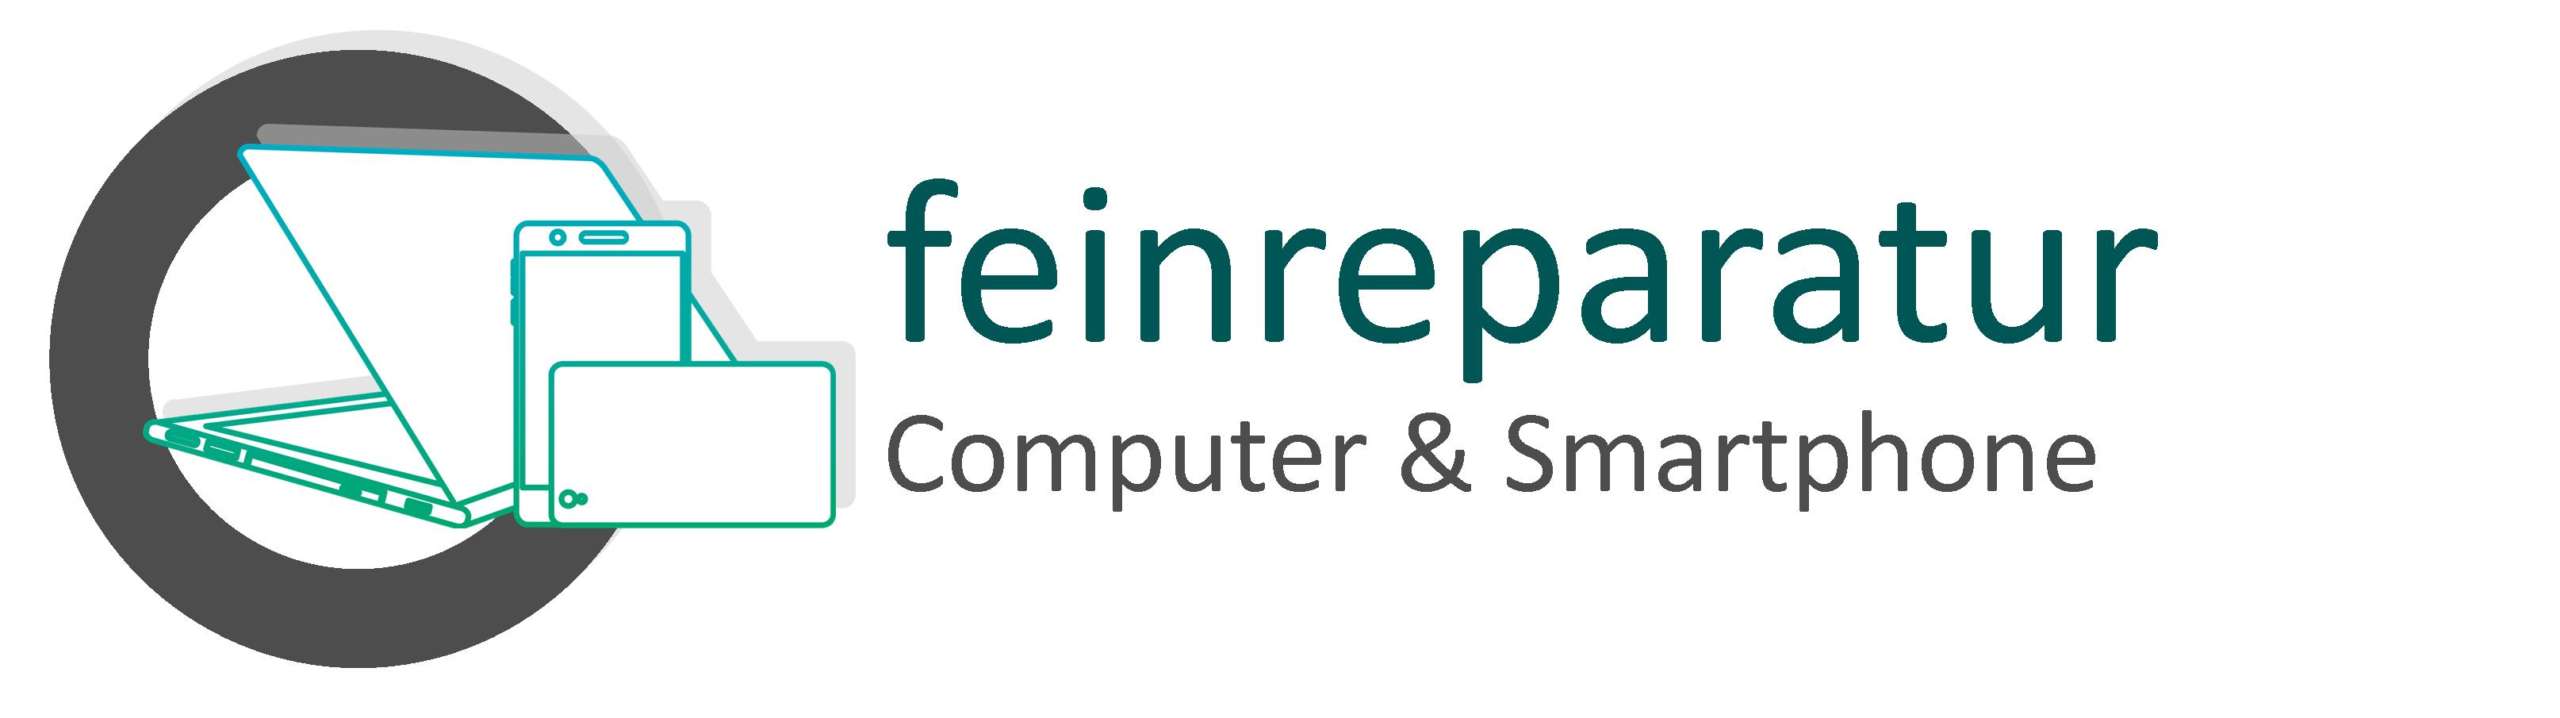 Feinreparatur - Smartphone & Laptop Macbook pro,Air Imac Reparatur Berlin